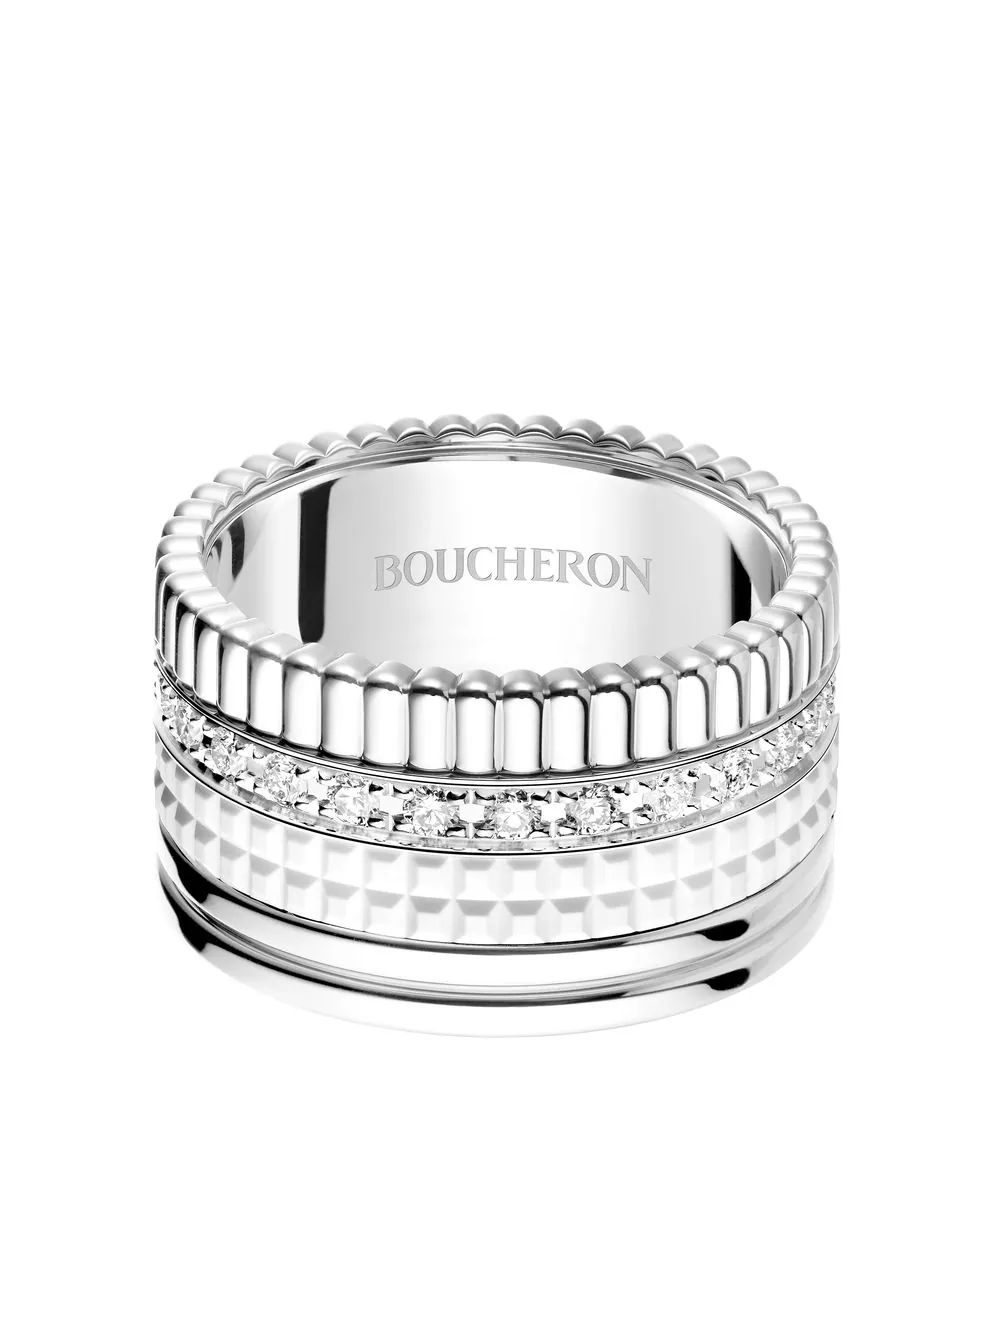 Boucheron Bague Quatre Double White Edition En Or Blanc 18ct Sertie De Diamants - Farfetch | Farfetch Global